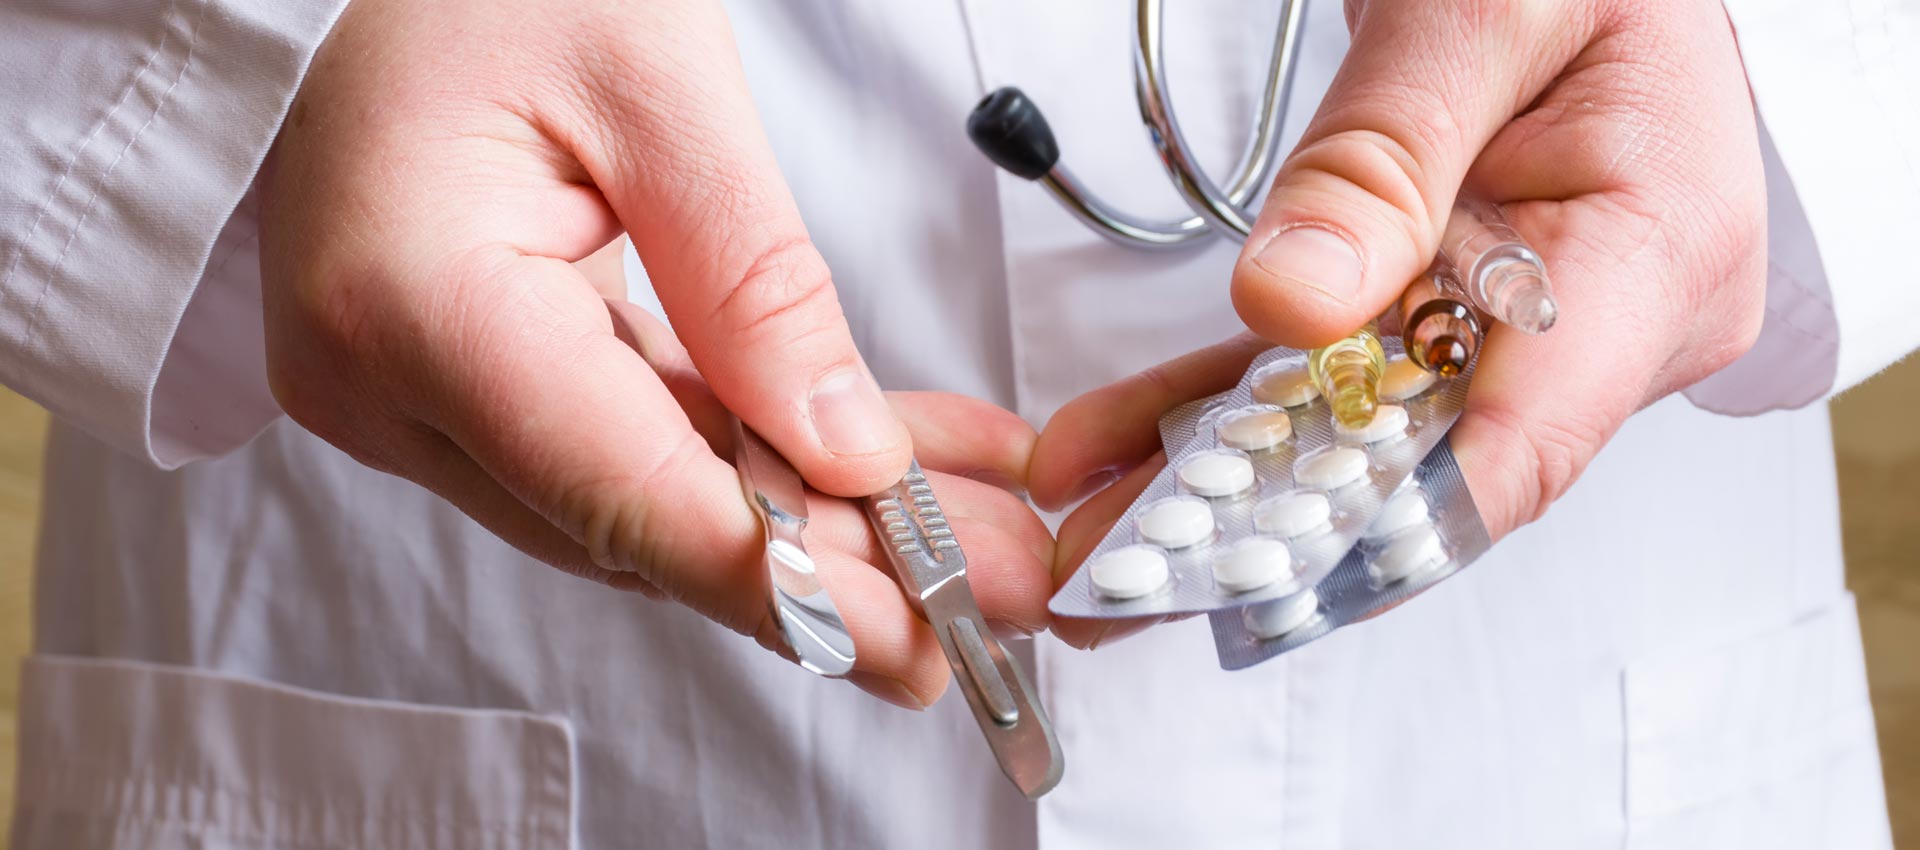 Abortion Pills and Medicine